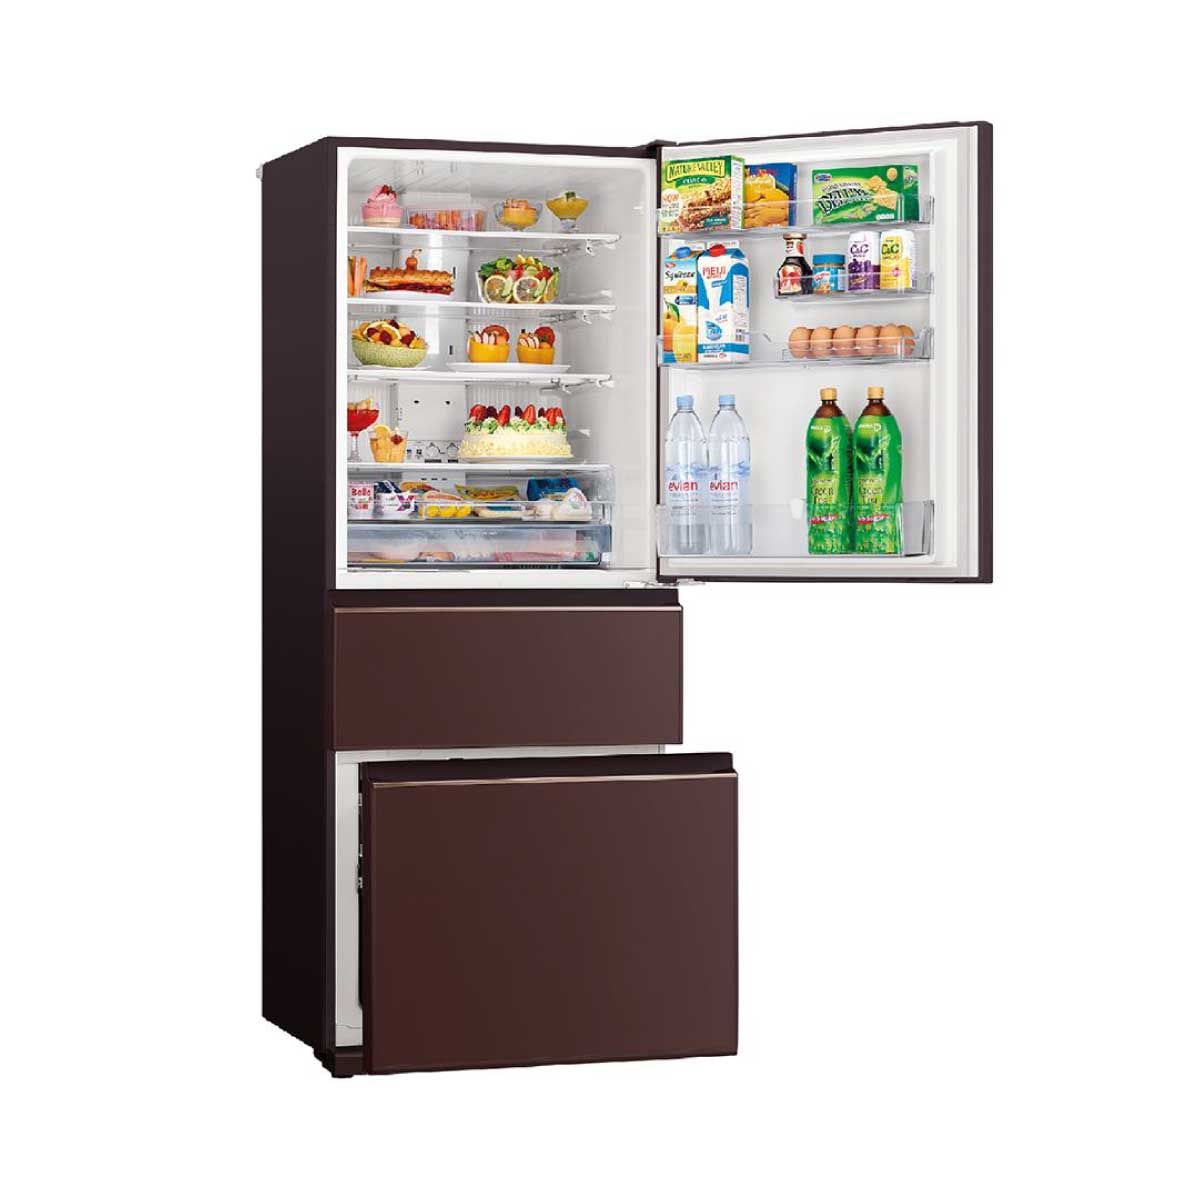 MITSUBISHI ELECTRIC ตู้เย็น 3 ประตู  Smart Freeze 15.9คิวสีน้ำตาลมุก รุ่น MRCGX51ES